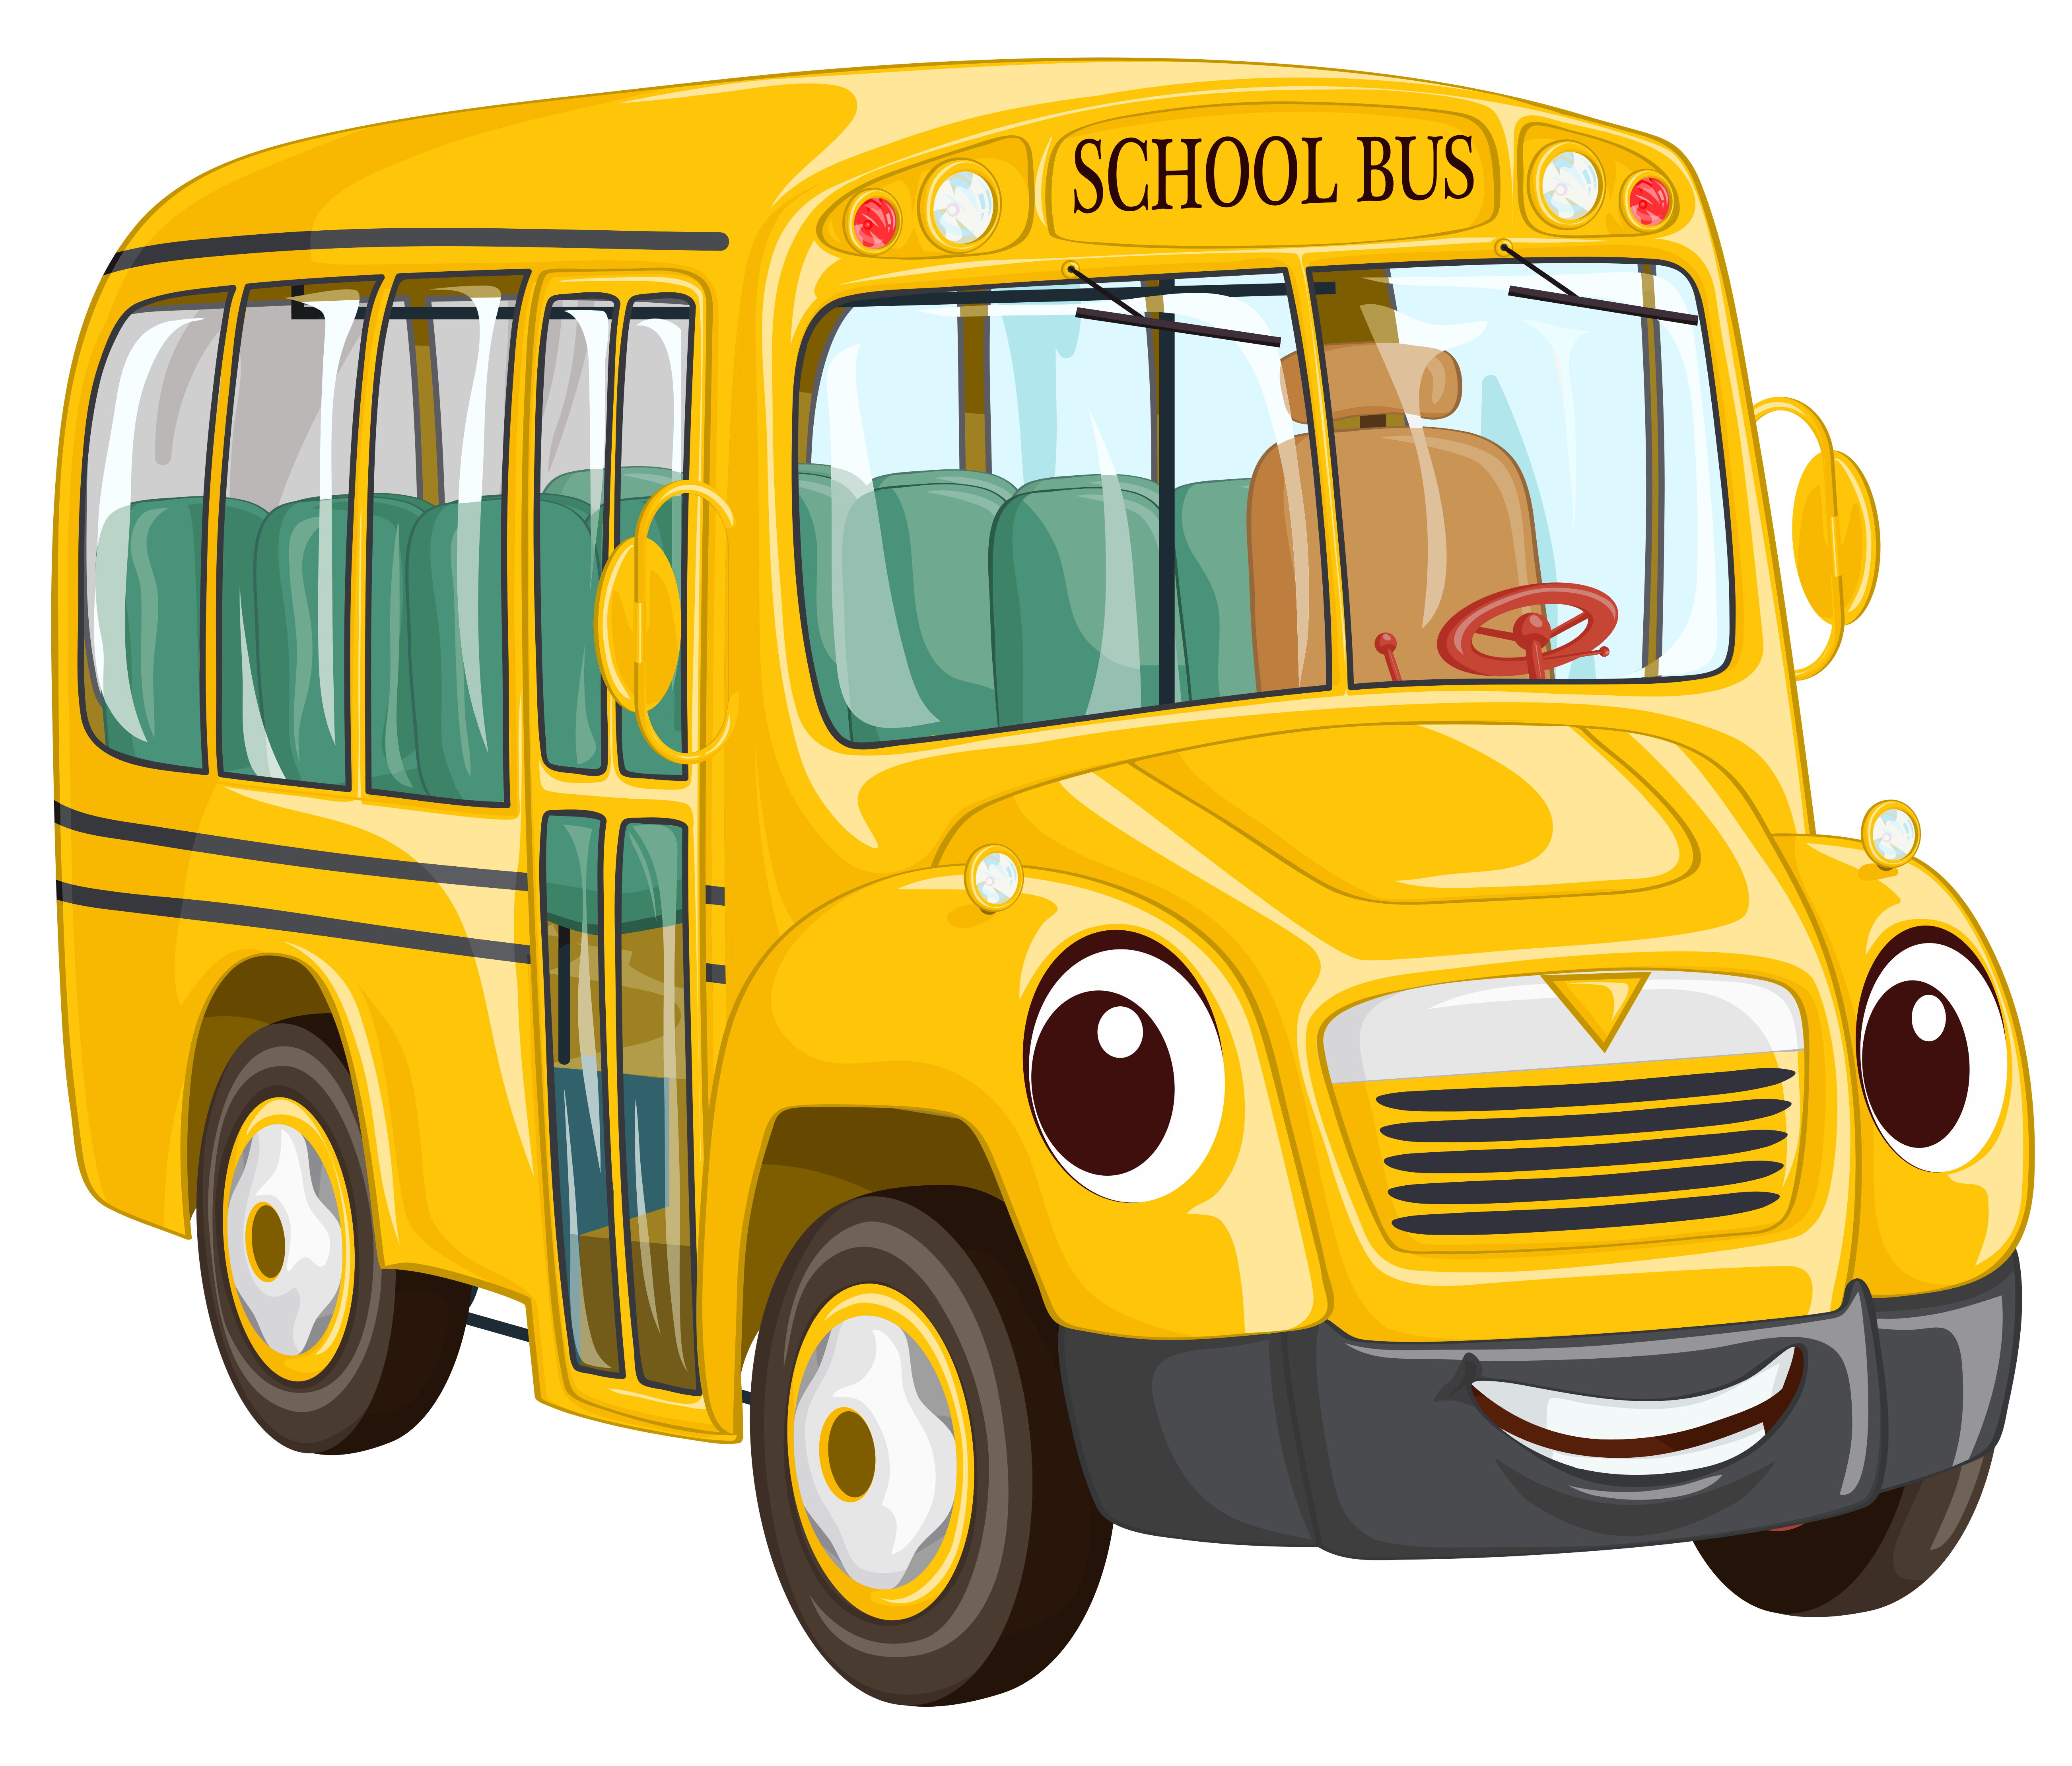 School bus clipart images 3 school bus clip art vector 5 2 - Clipartix